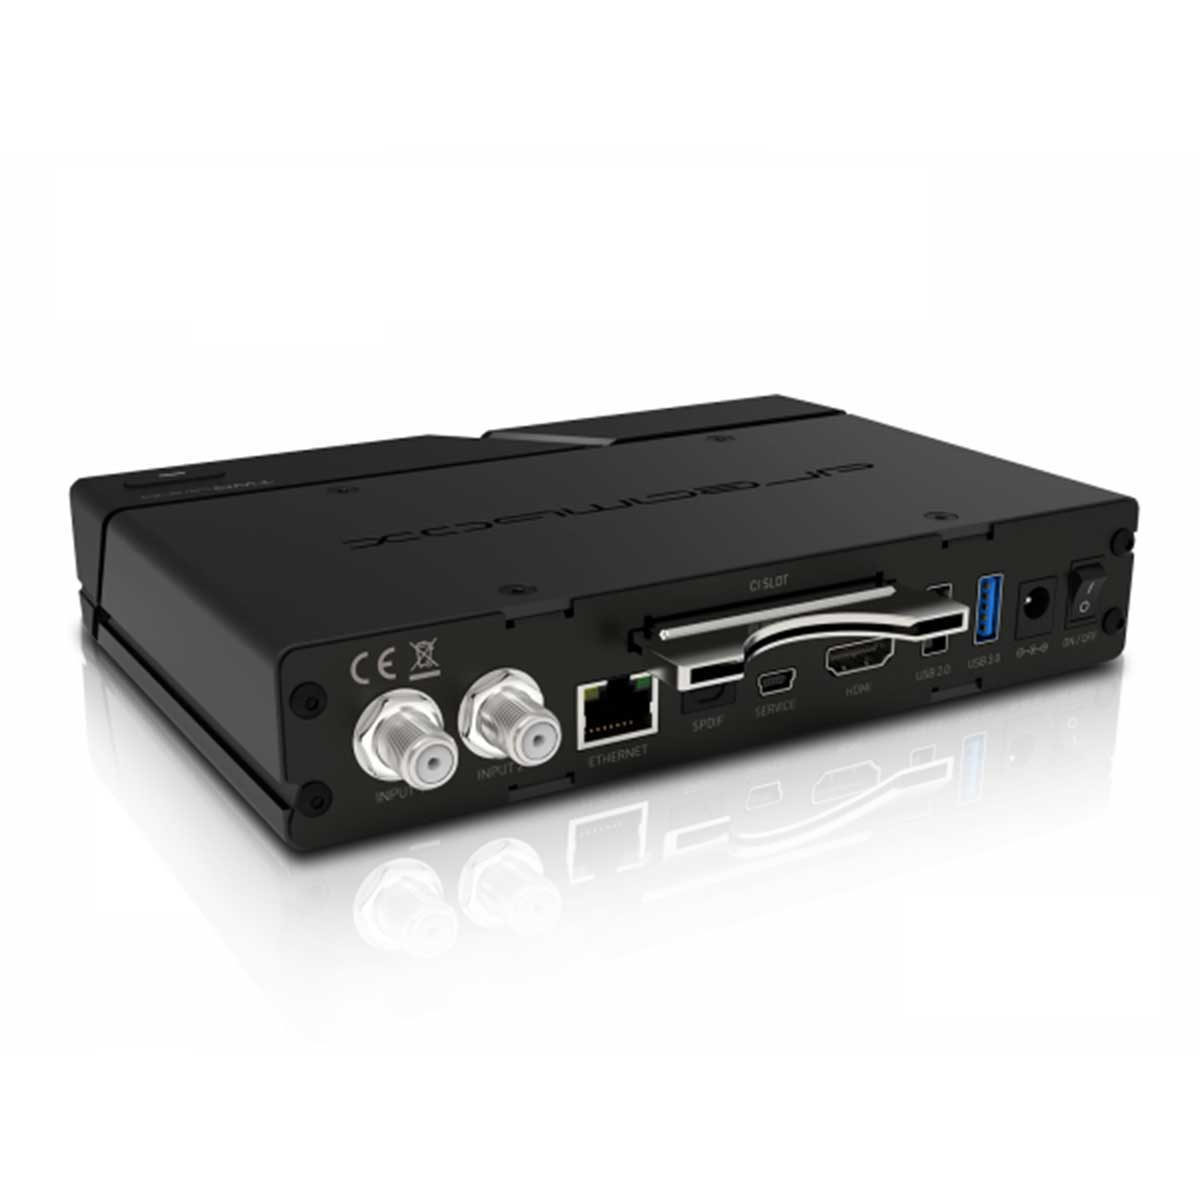 DREAM MULTIMEDIA TWO Dreambox UltraHD PVR-Funktion=optional, schwarz) Sat-Receiver DVB-S2, (HDTV